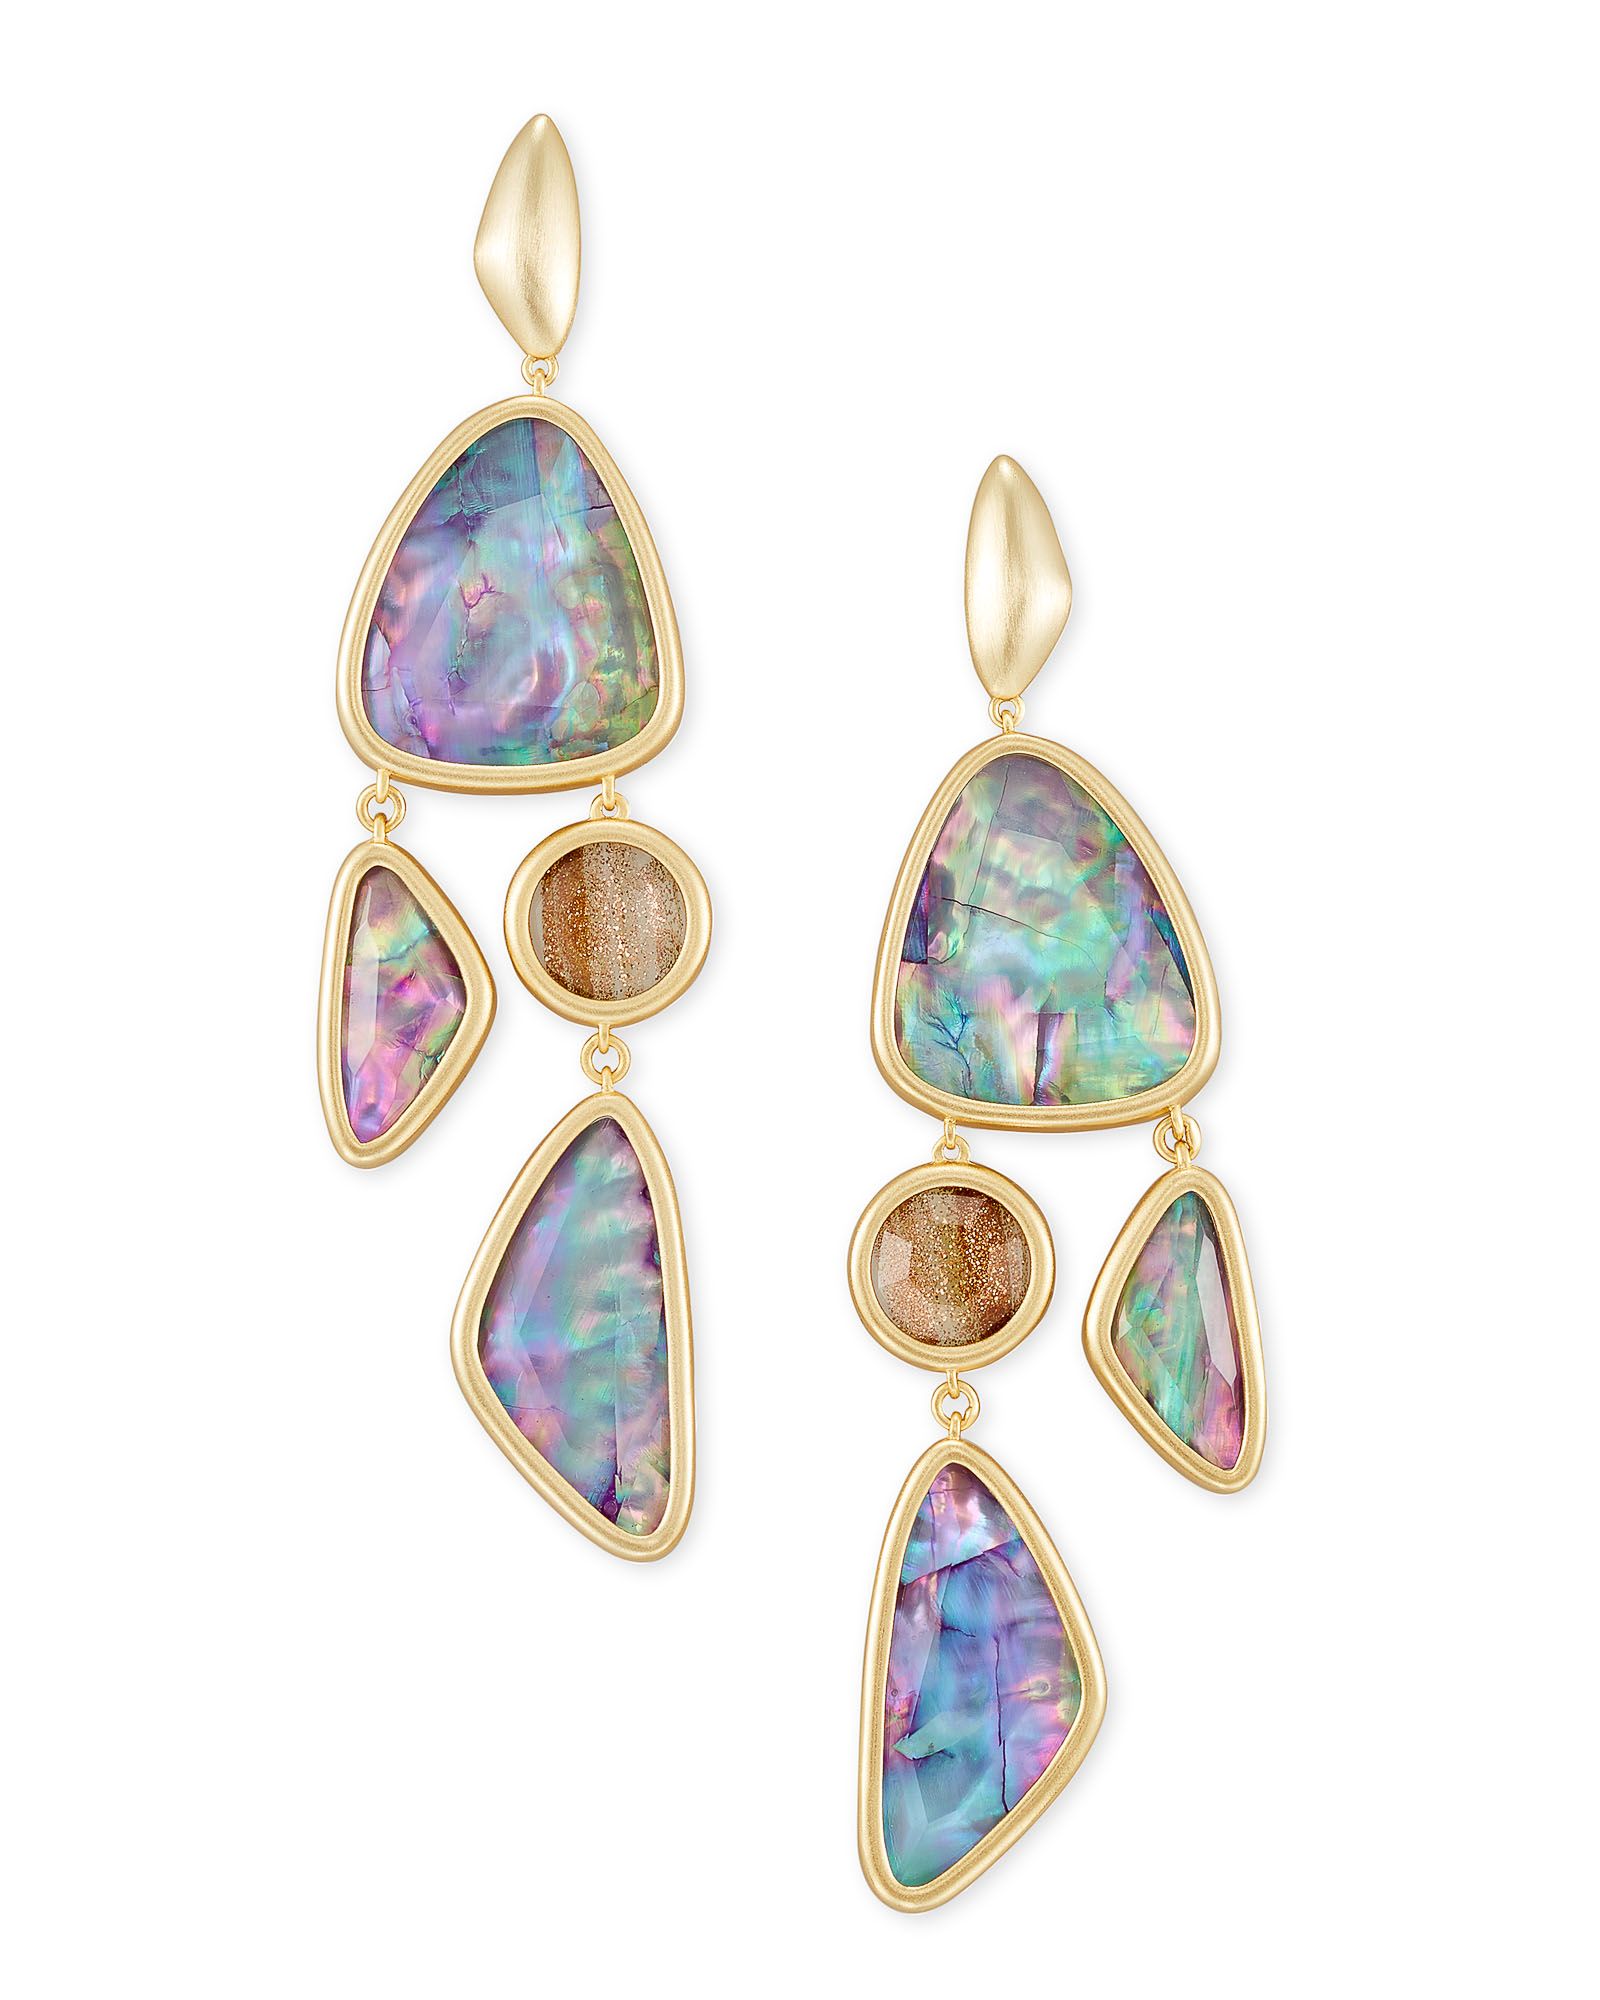 Margot Gold Statement Earrings in Lilac Abalone | Kendra Scott